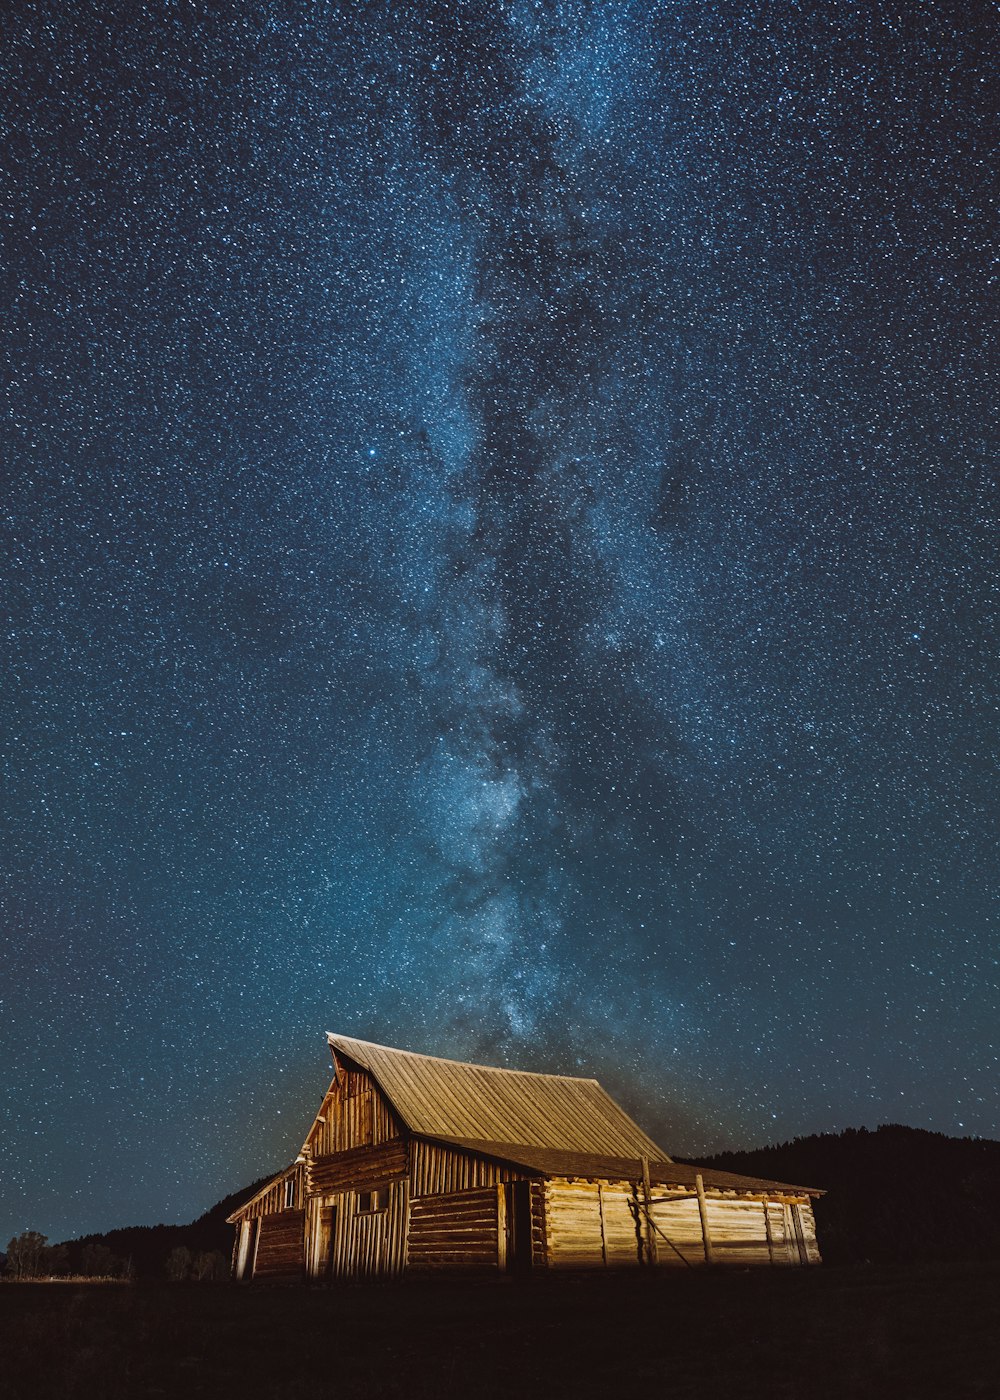 a house under a starry sky